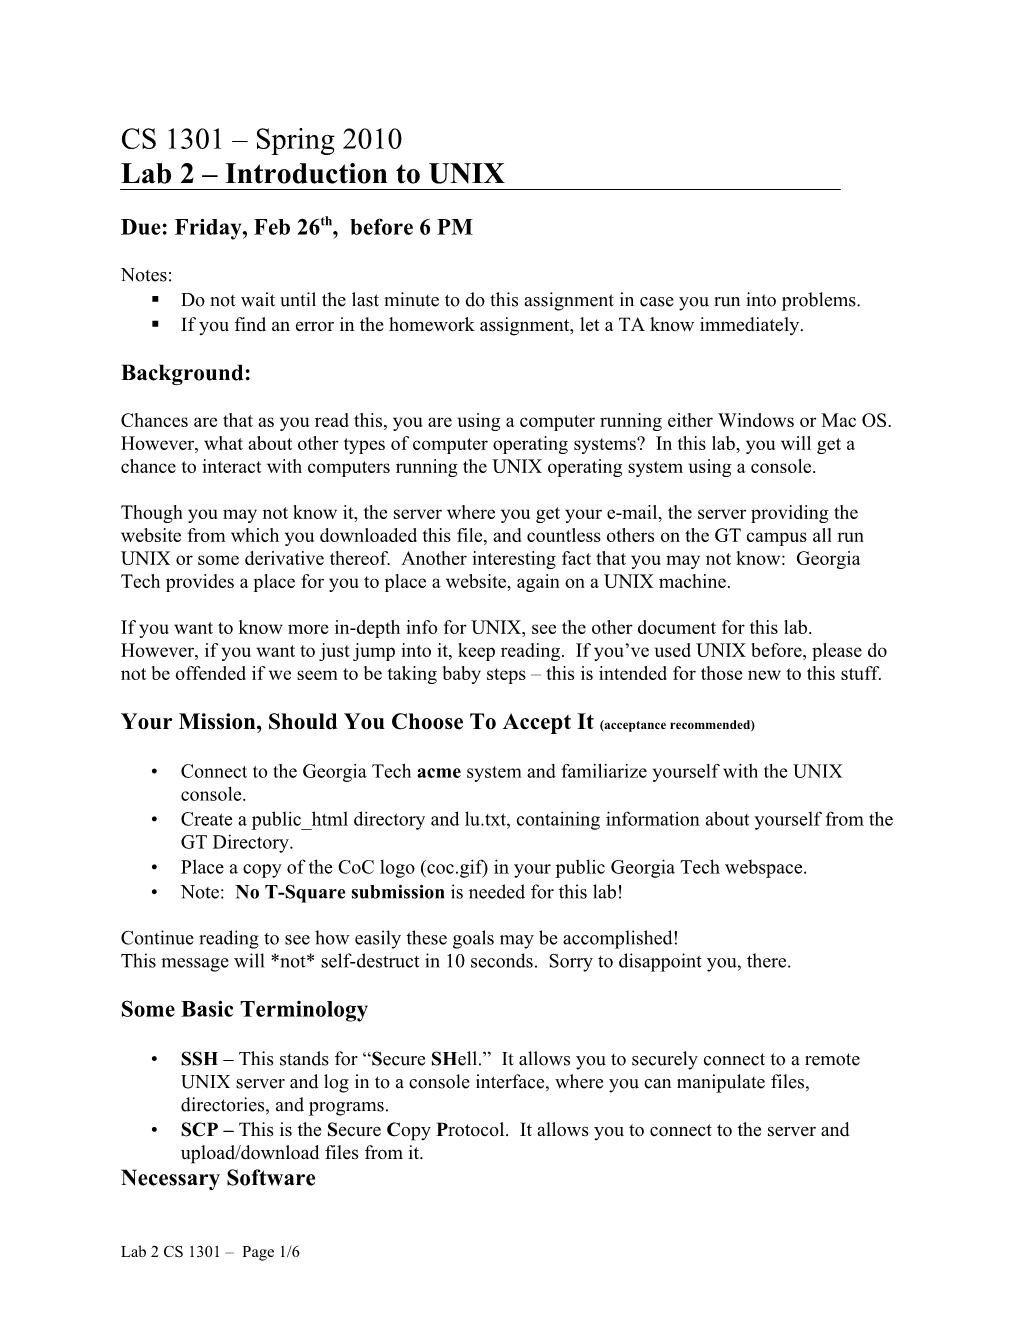 CS 1301 – Spring 2010 Lab 2 – Introduction to UNIX